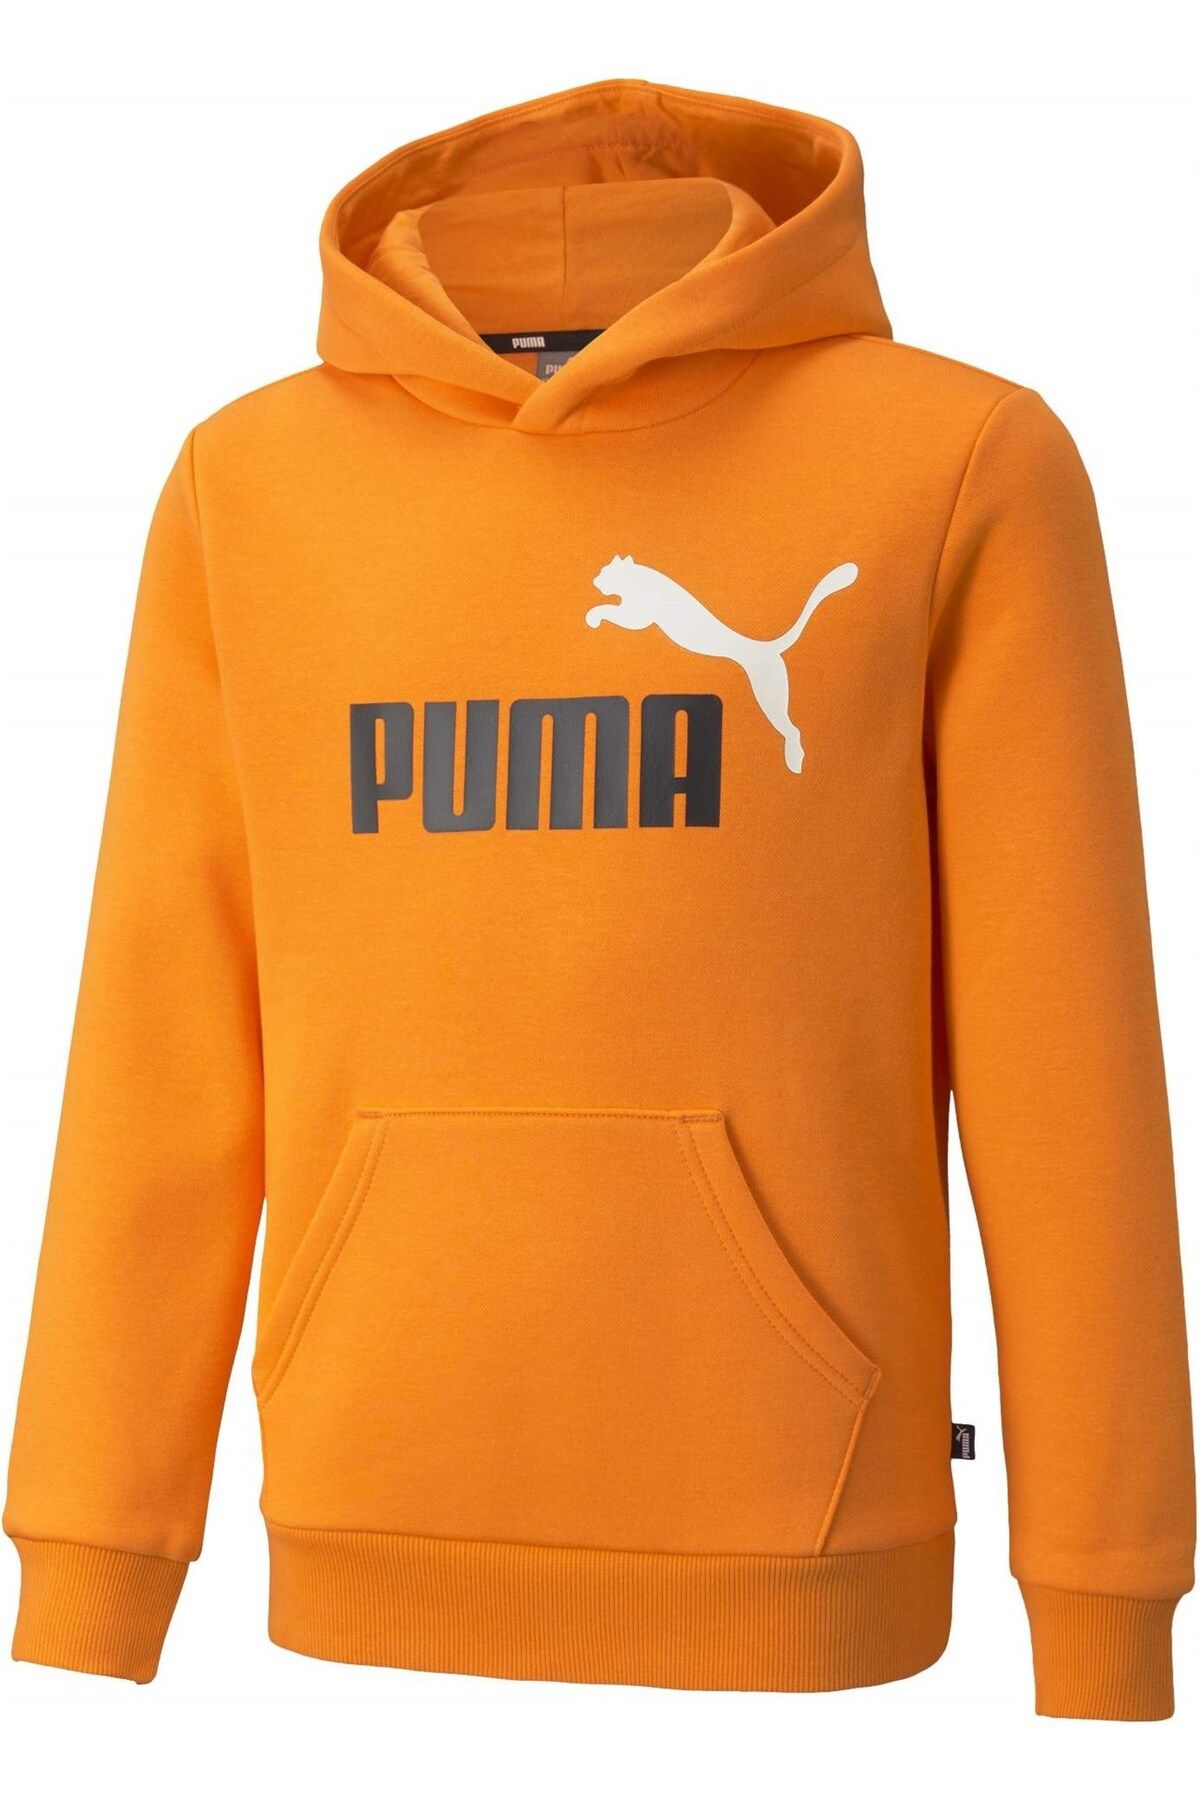 Puma Ess+ 2 Col - Erkek Pamuklu Kapüşonlu Sweatshirt - 586764 30